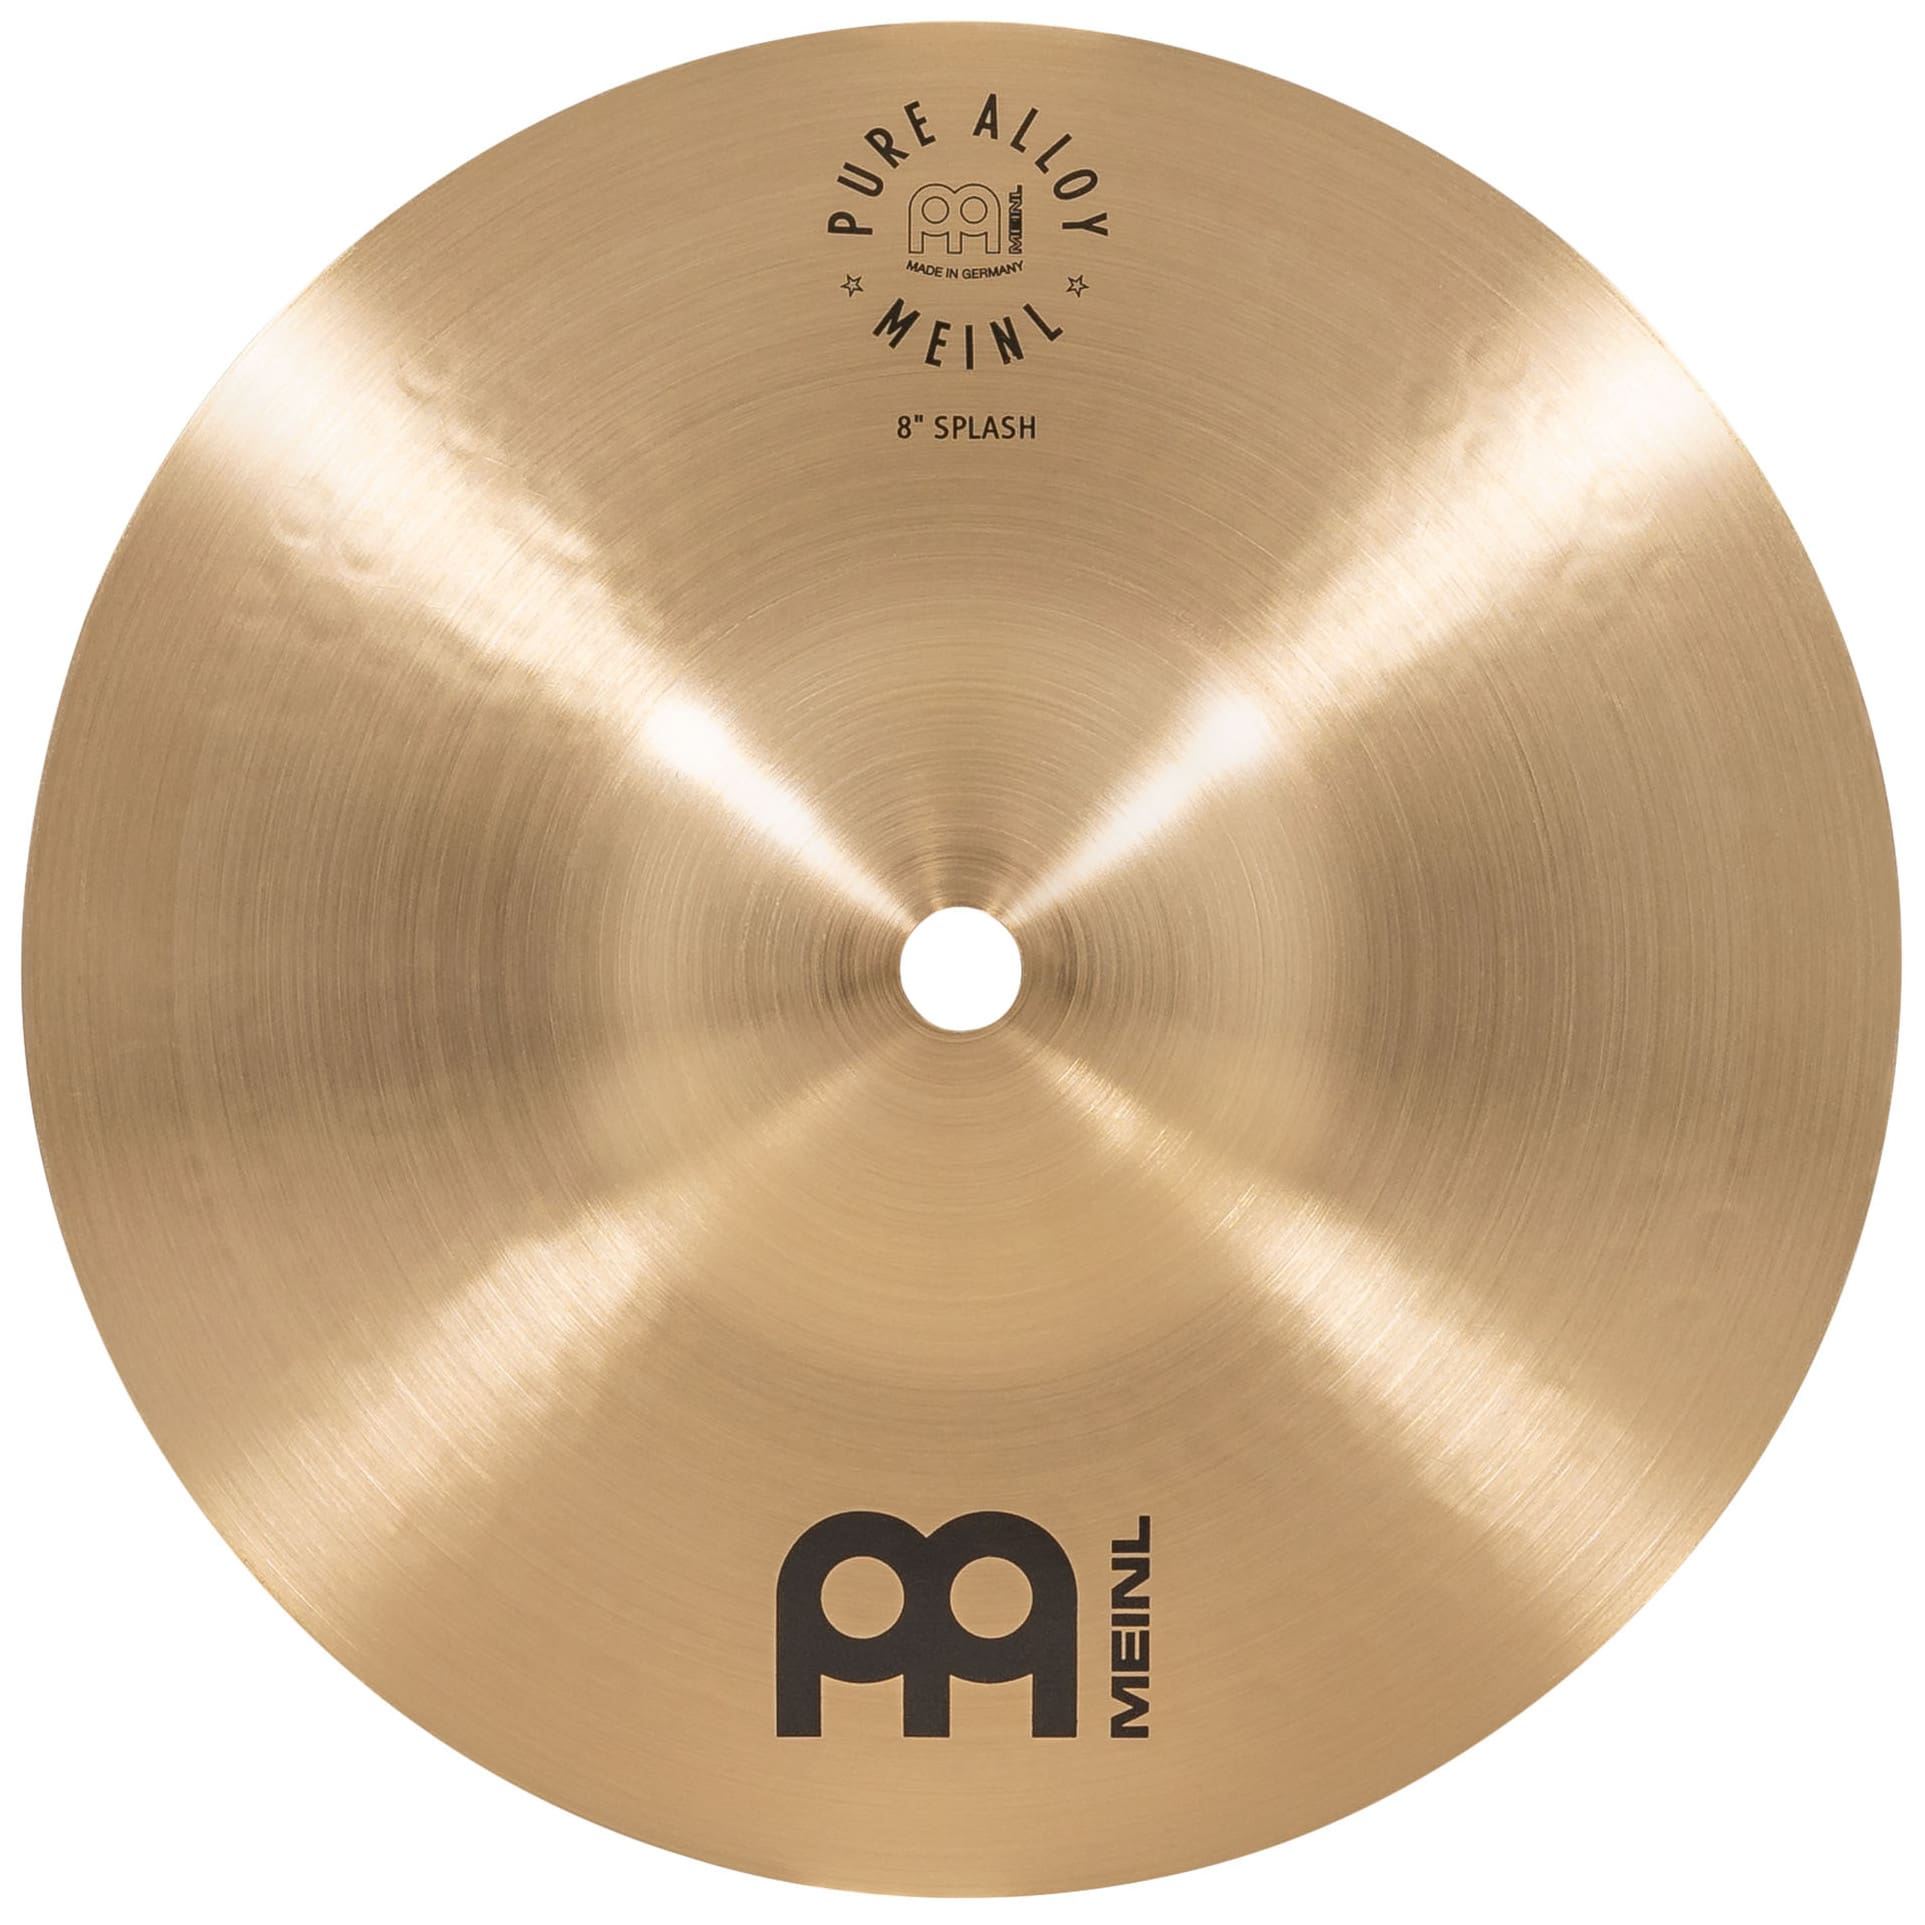 Meinl Cymbals PA8S - 8" Pure Alloy Splash